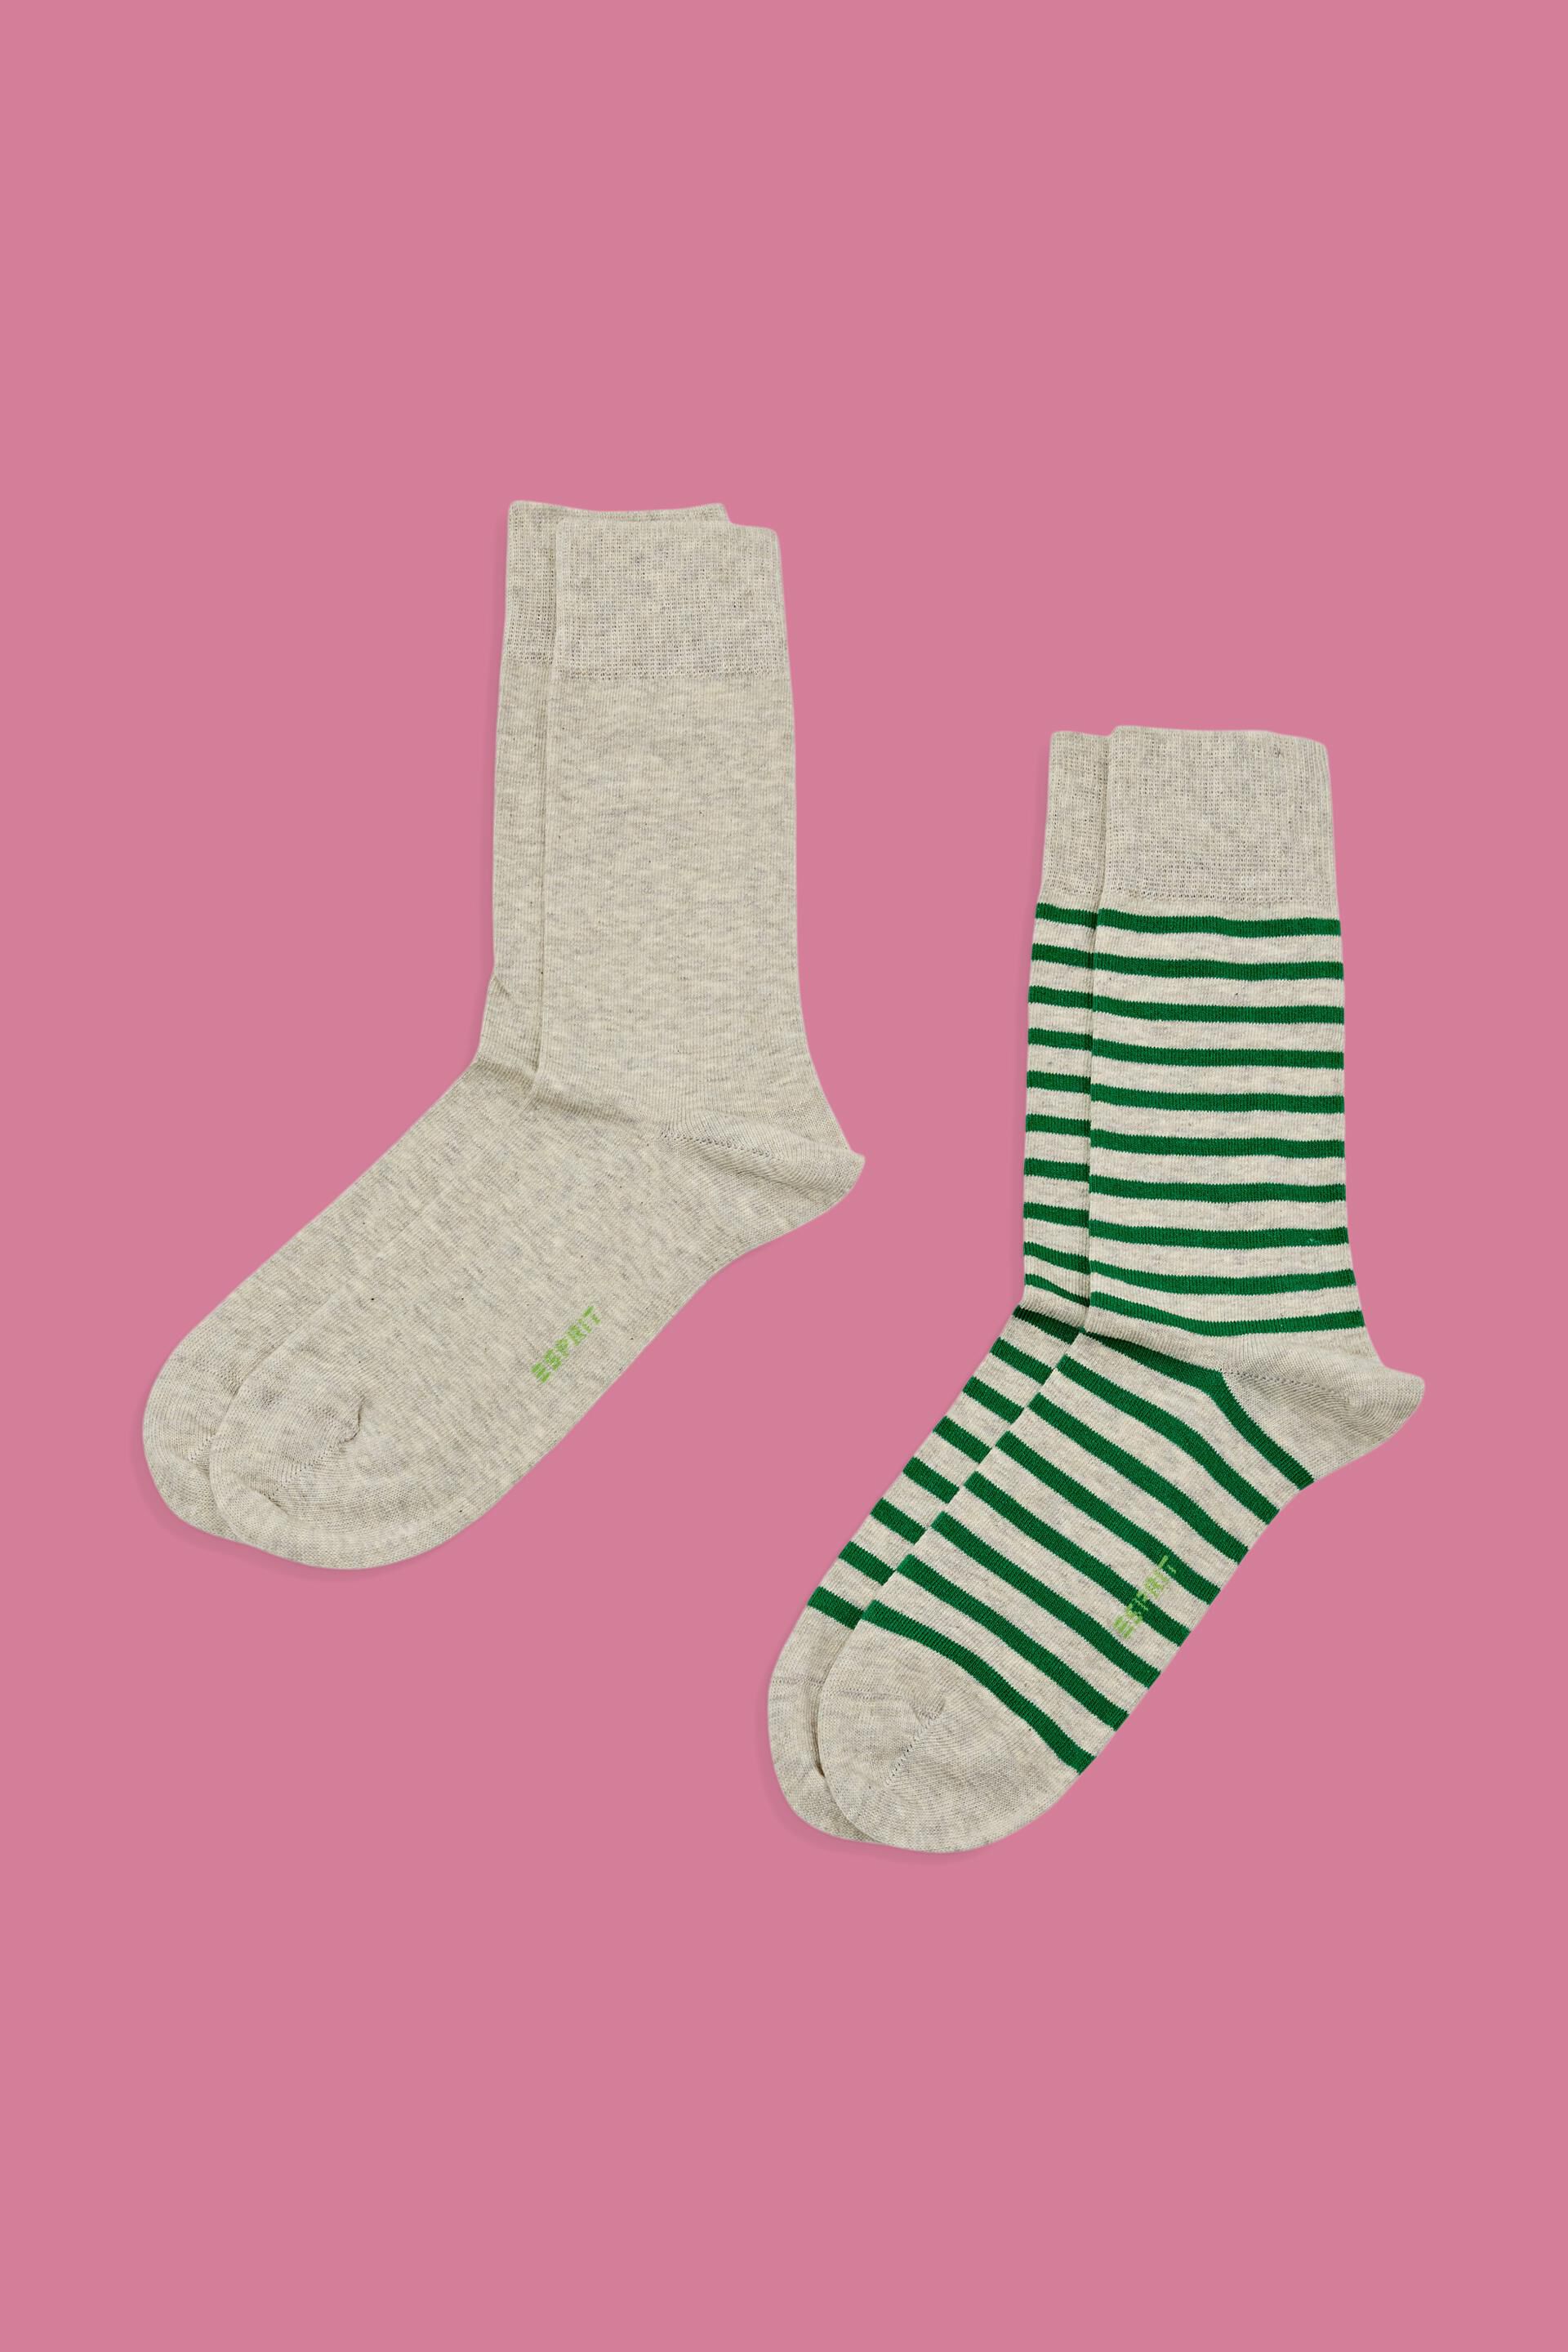 Esprit cotton organic socks, 2-pack of